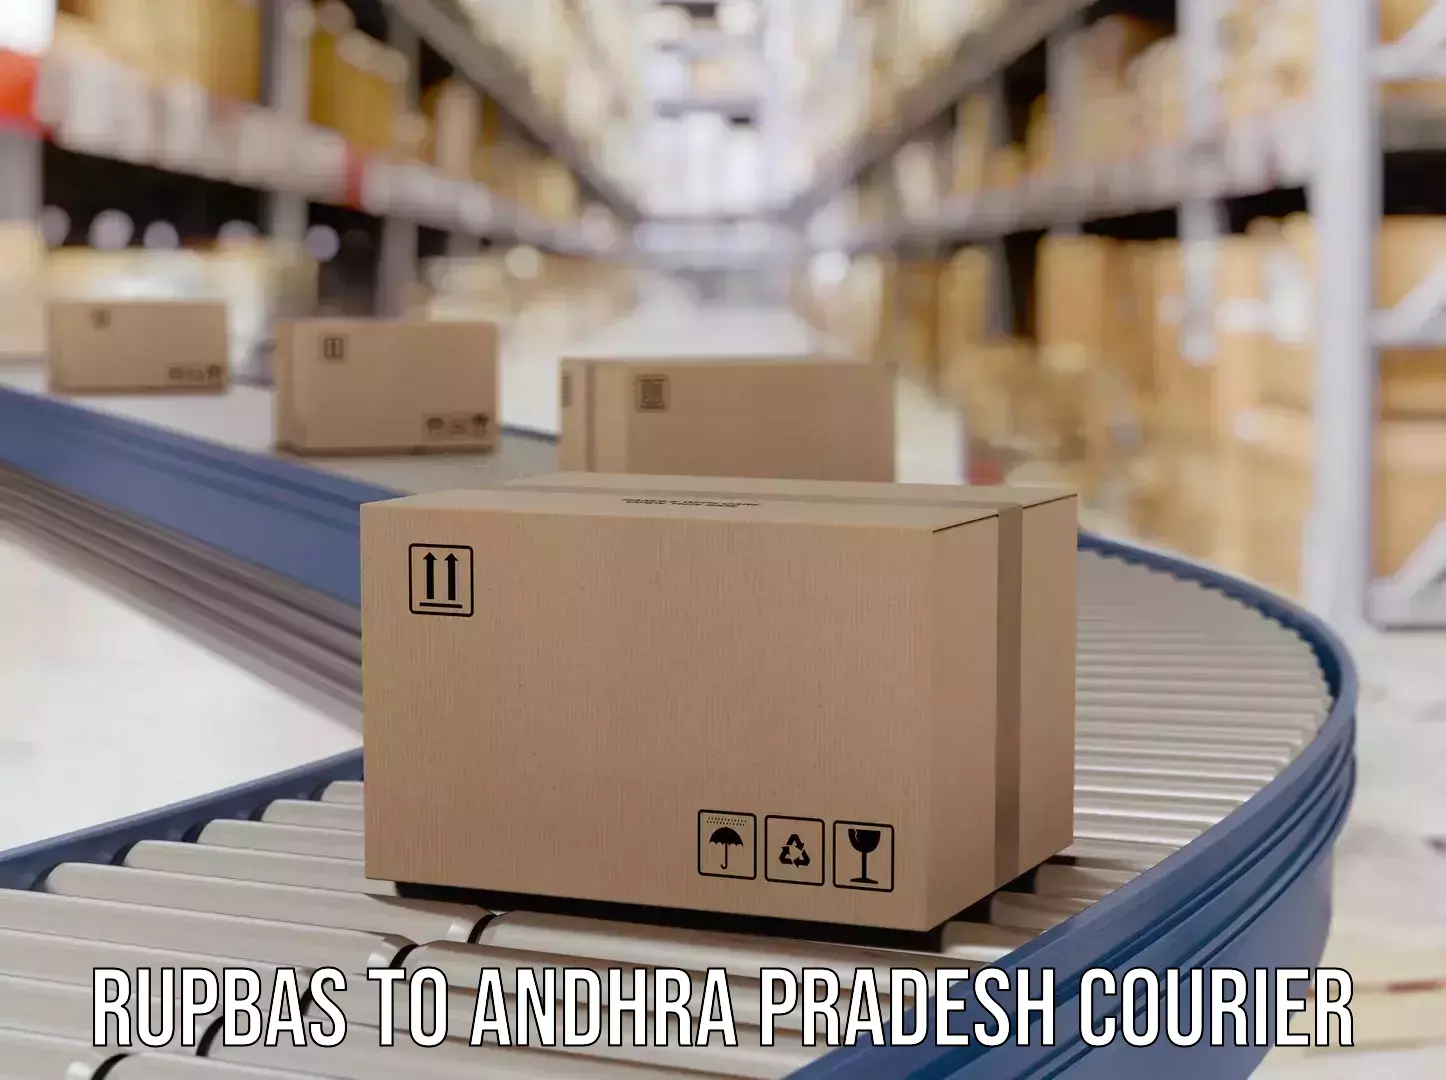 24/7 courier service Rupbas to Andhra Pradesh